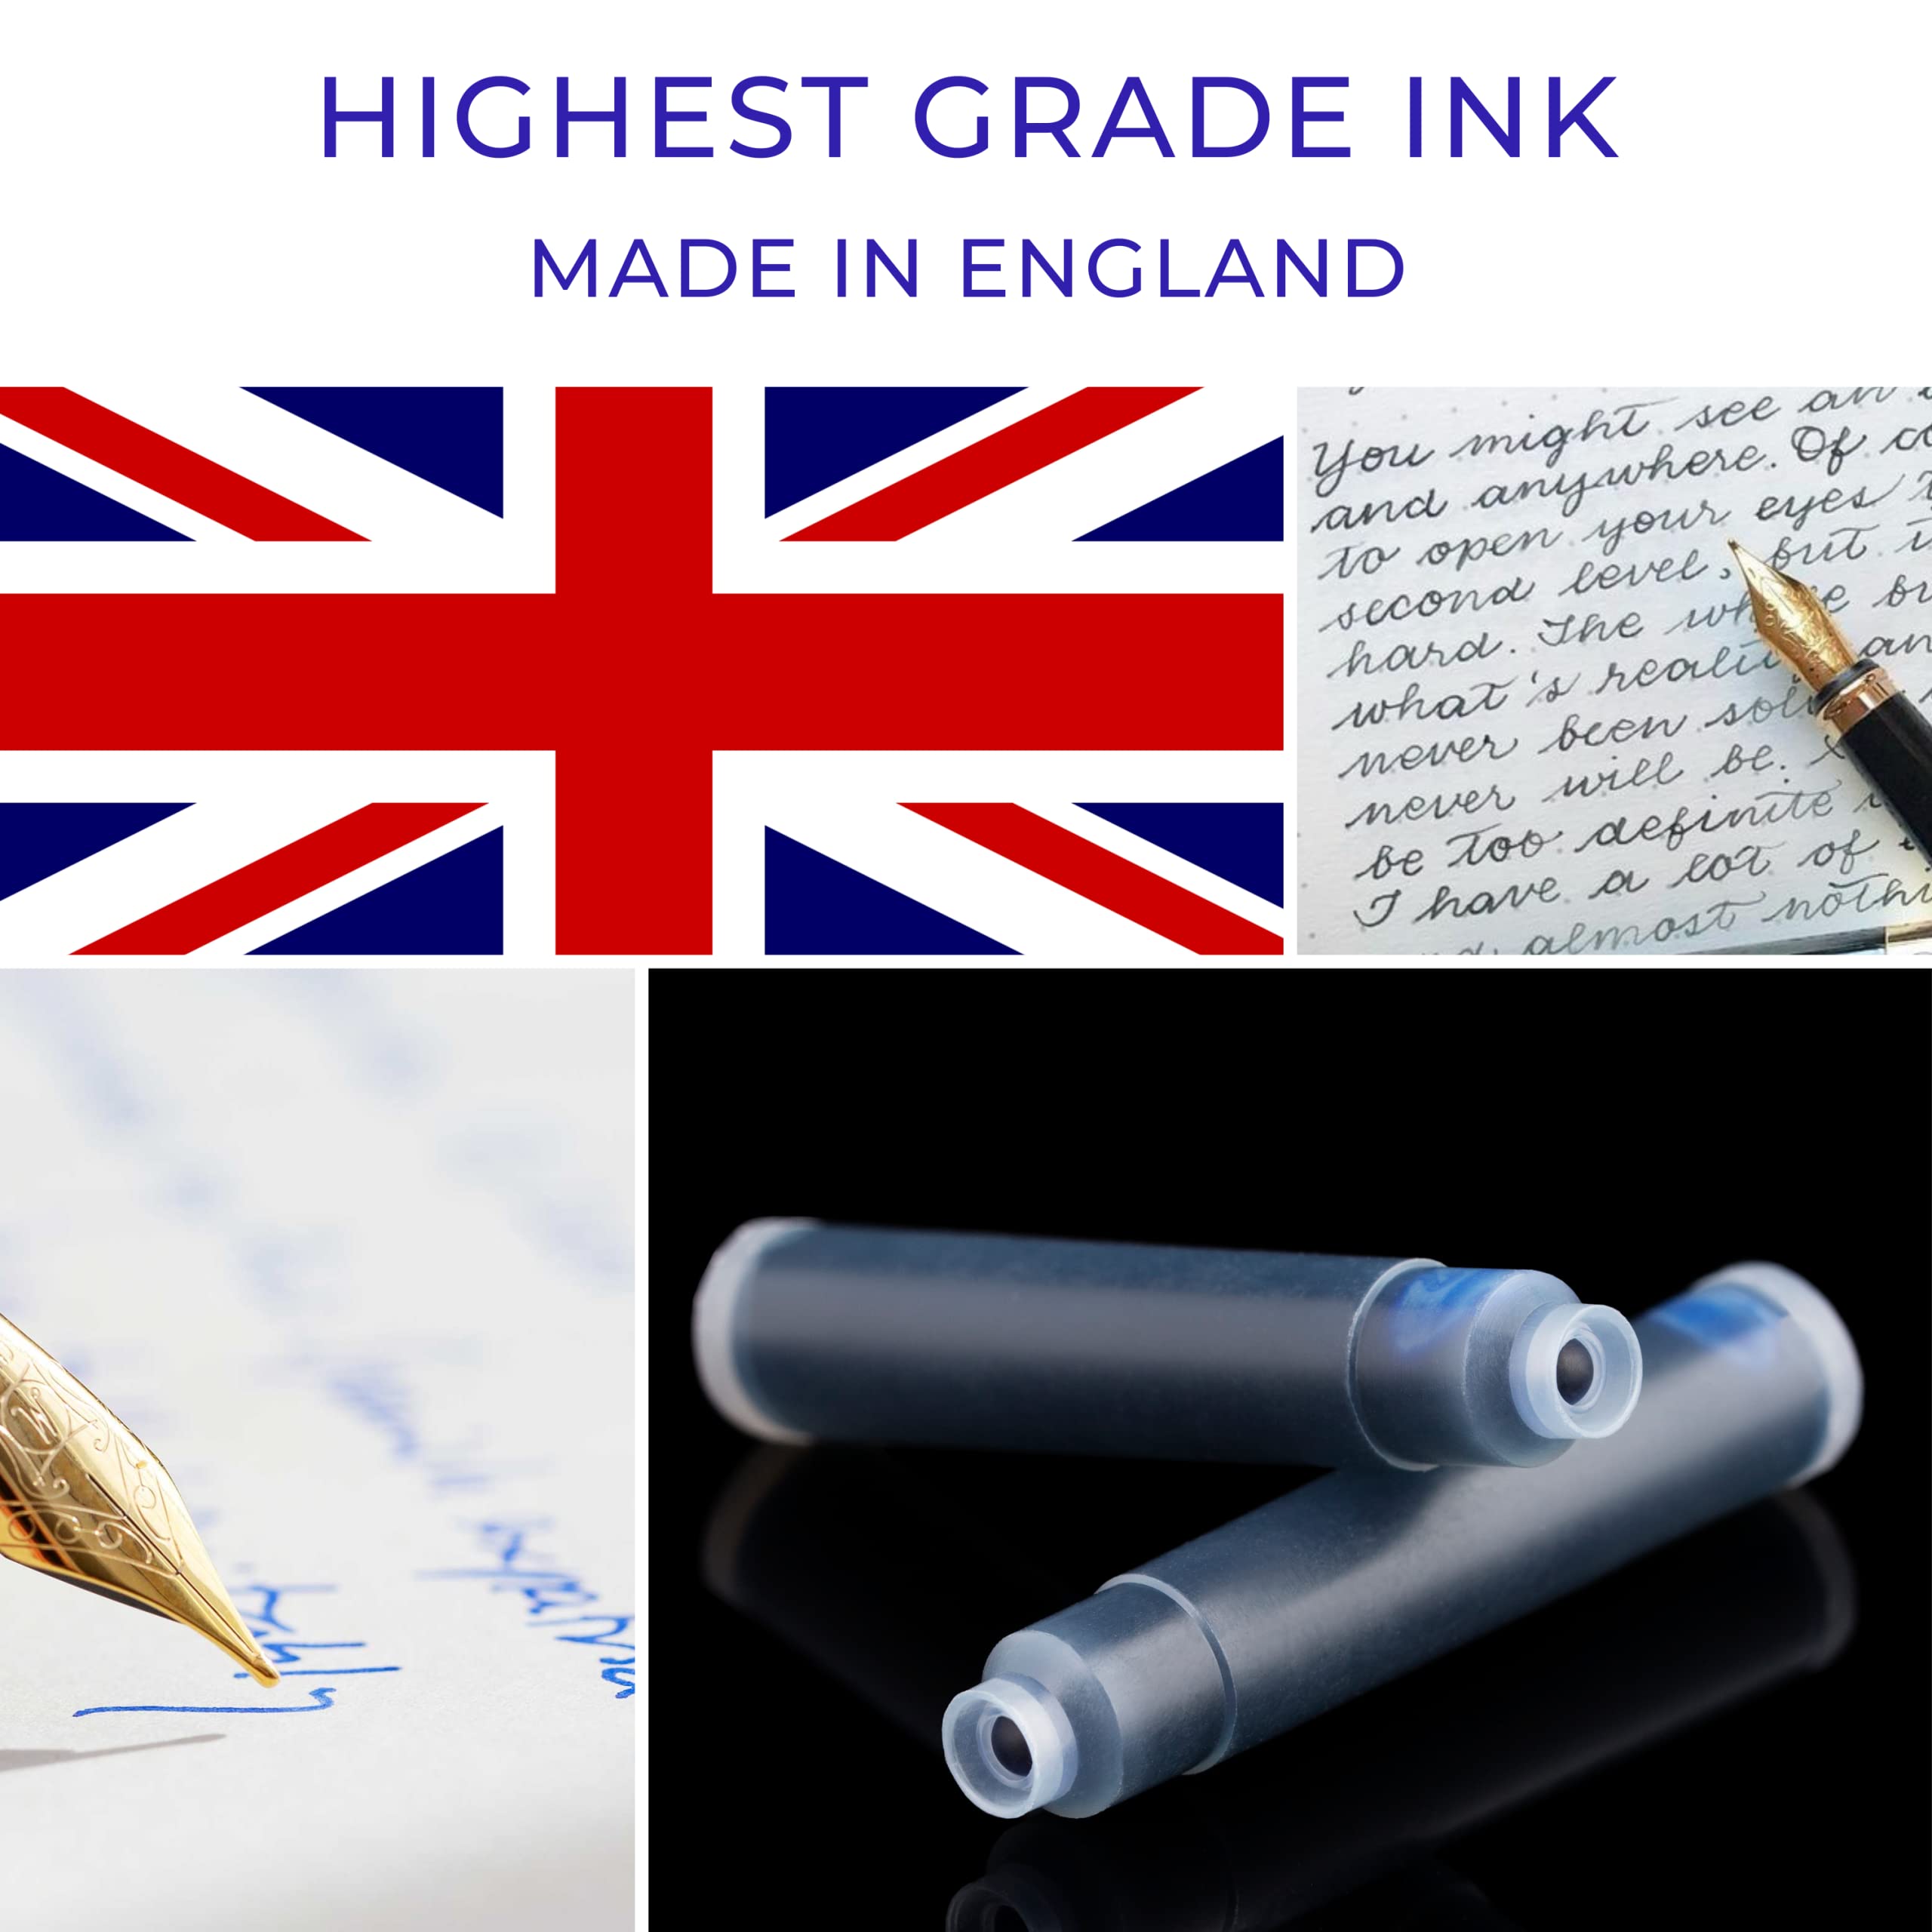 Scriveiner Fountain Pen Ink Cartridges - Blue - 20 Standard International Ink Cartridges, Made in UK